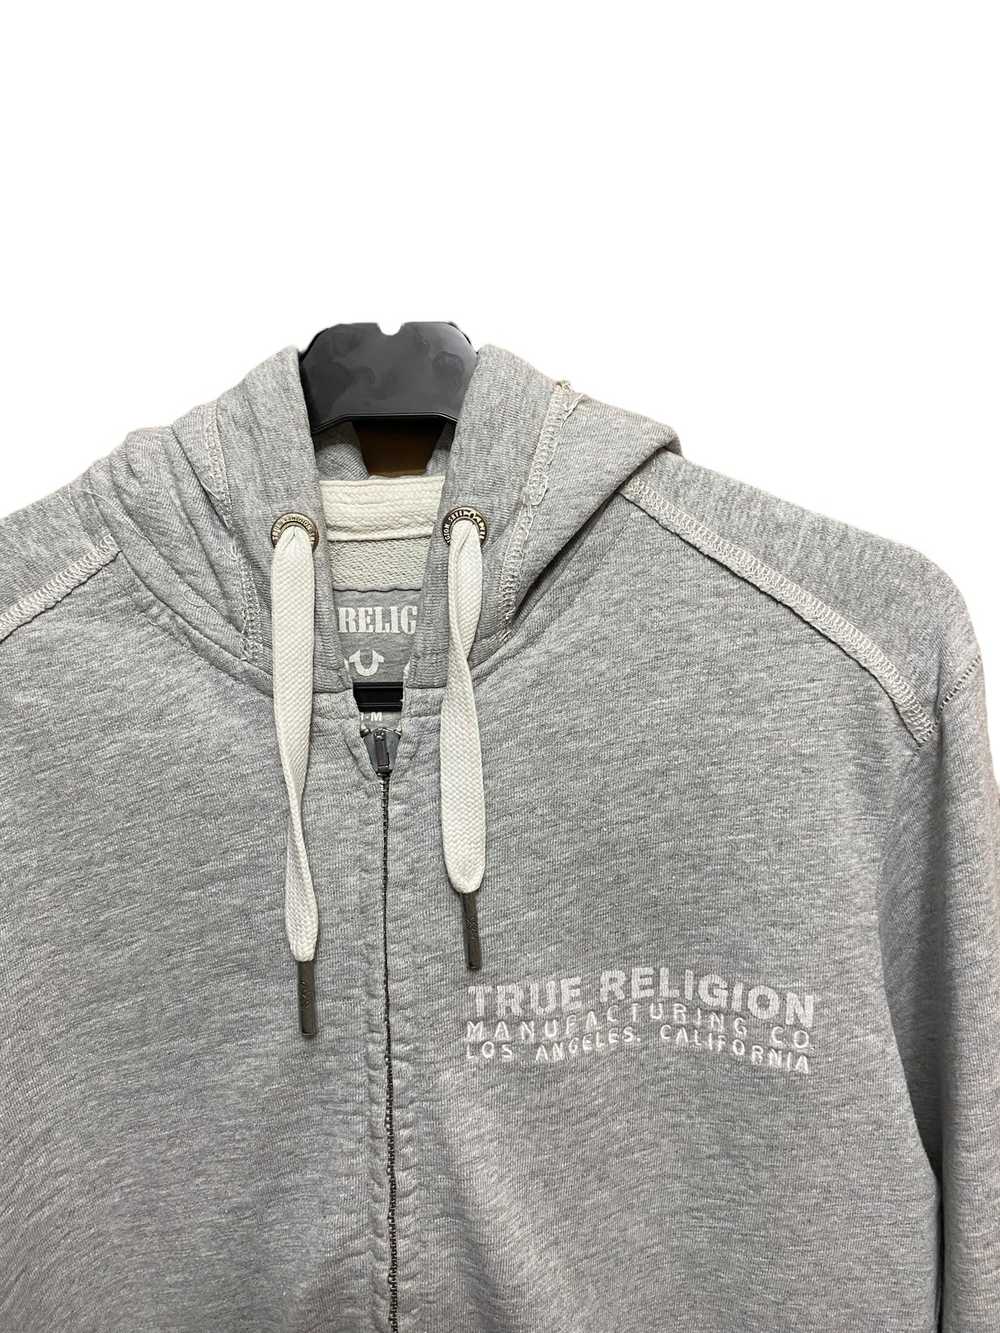 True Religion True Religion gray zip hoodie, size… - image 2